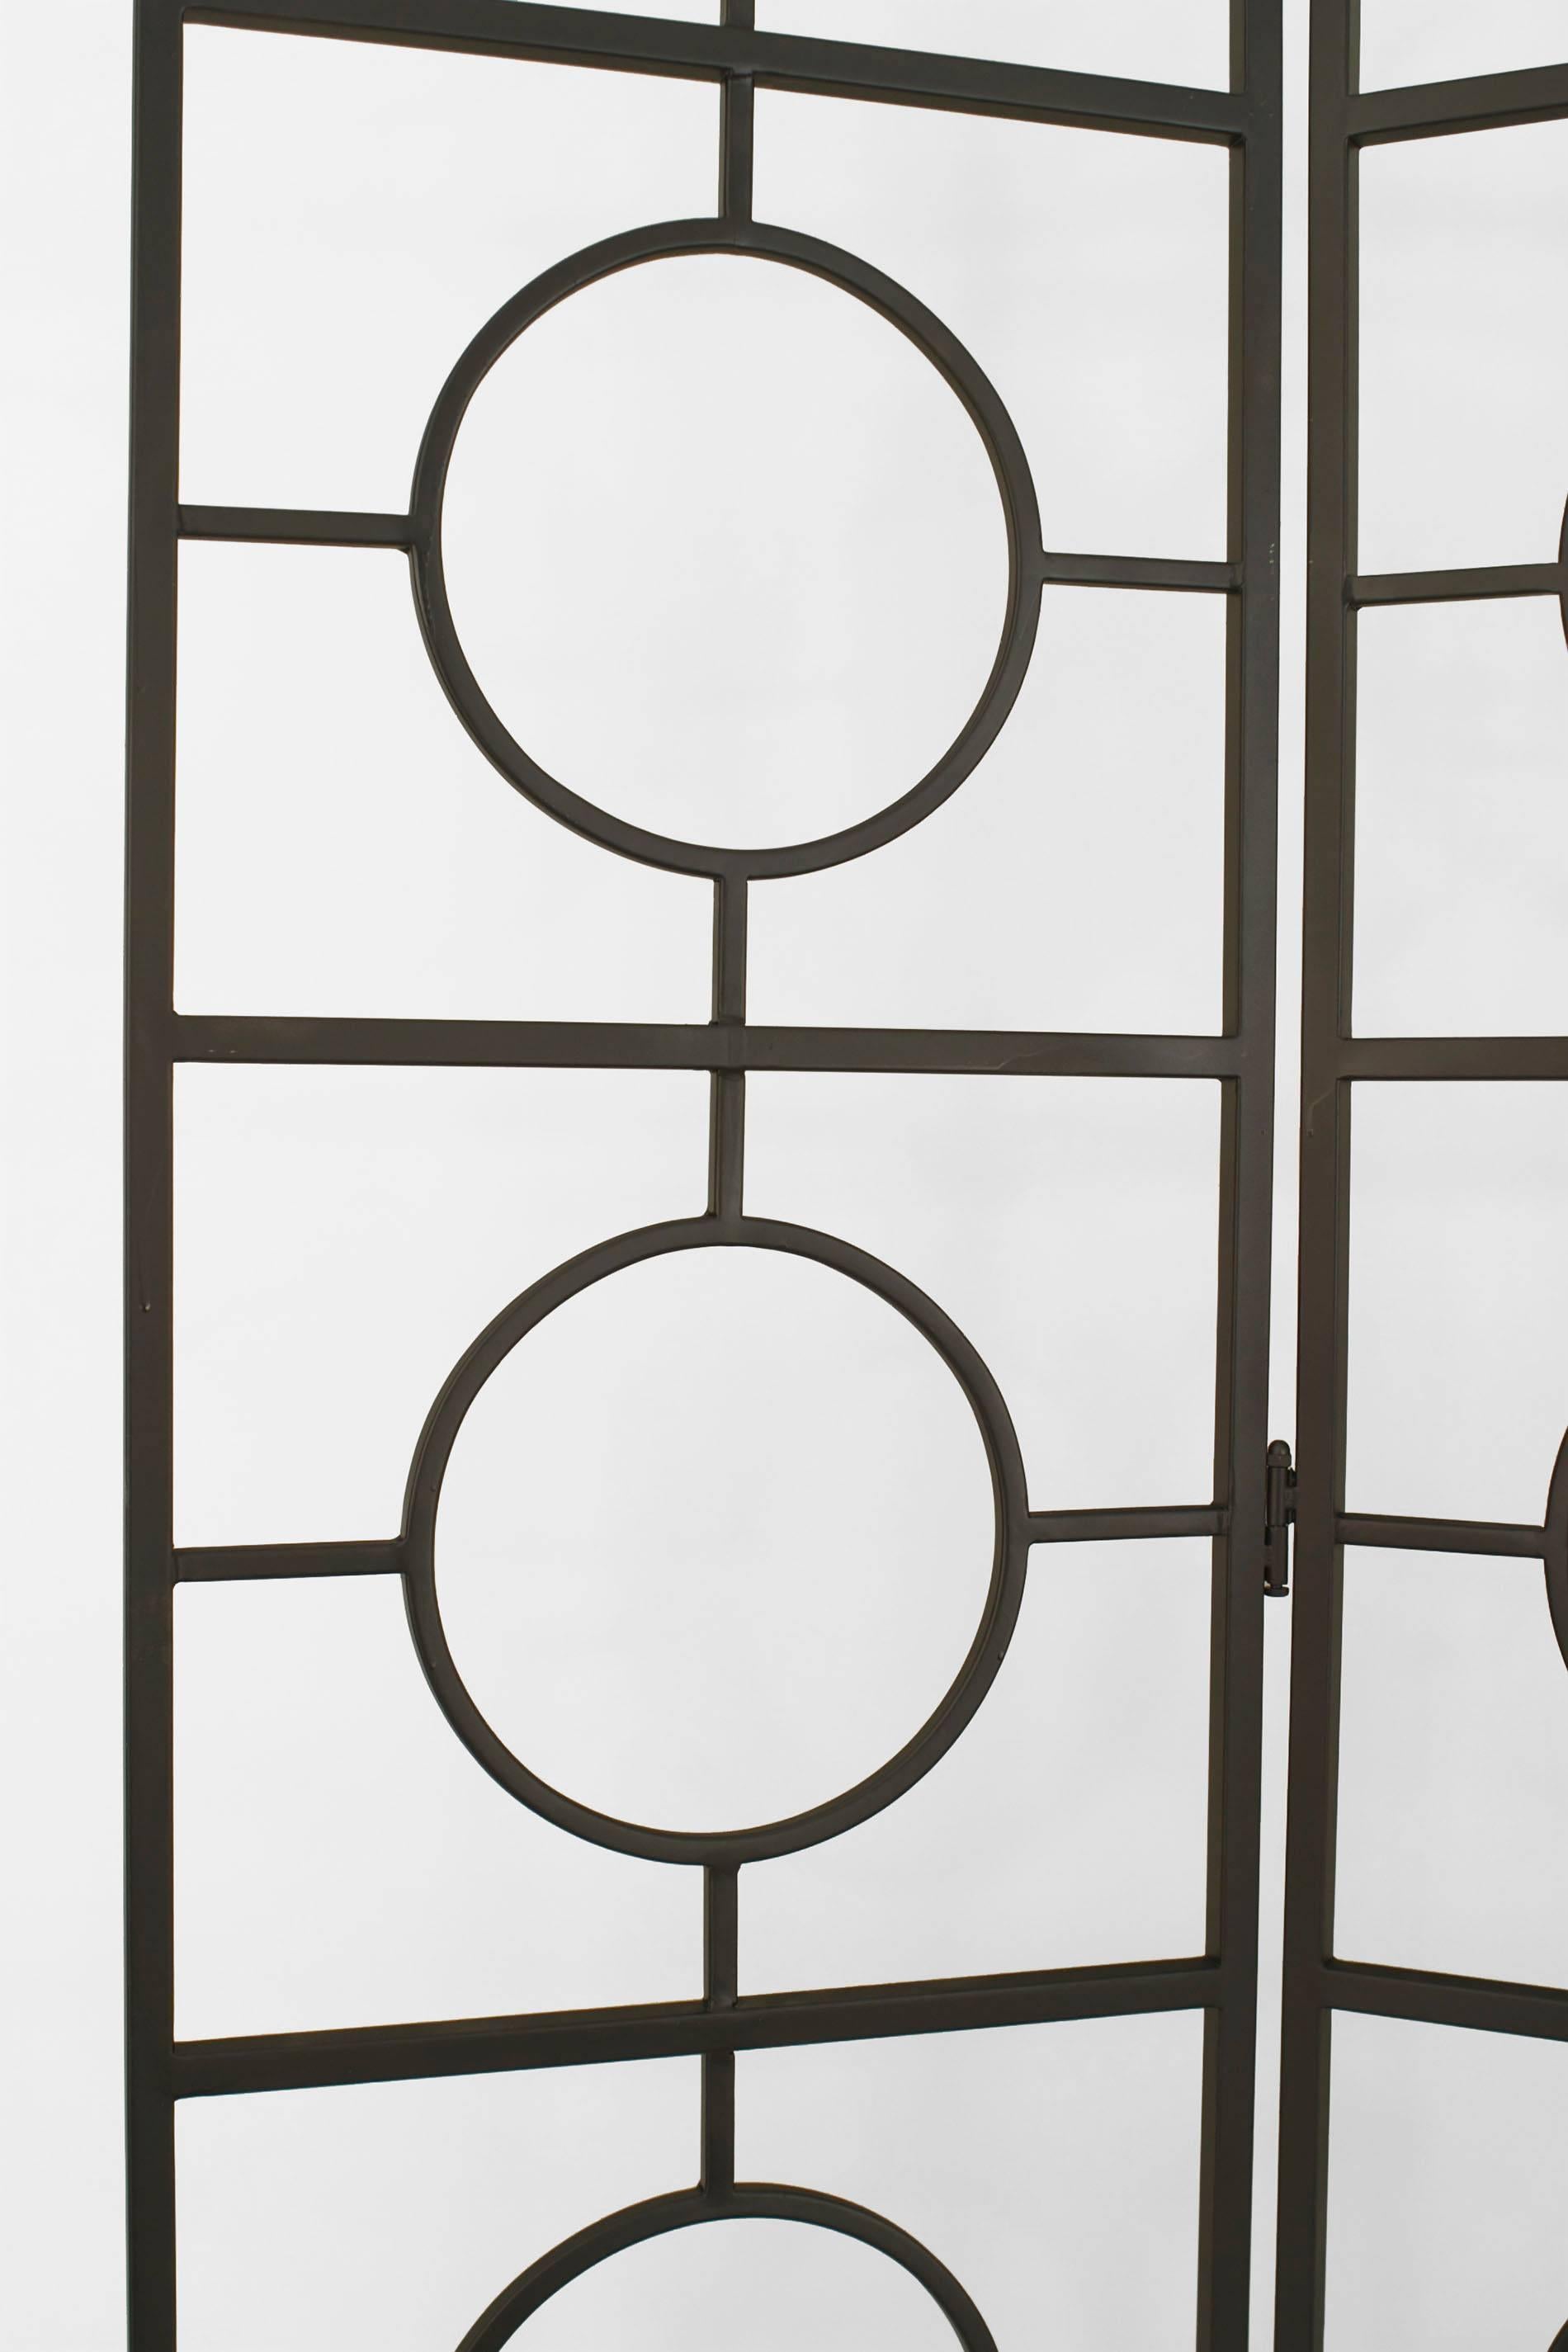 American Post-War Design 3 fold black hand wrought brushed steel screen showing interlocking circles (each fold 84